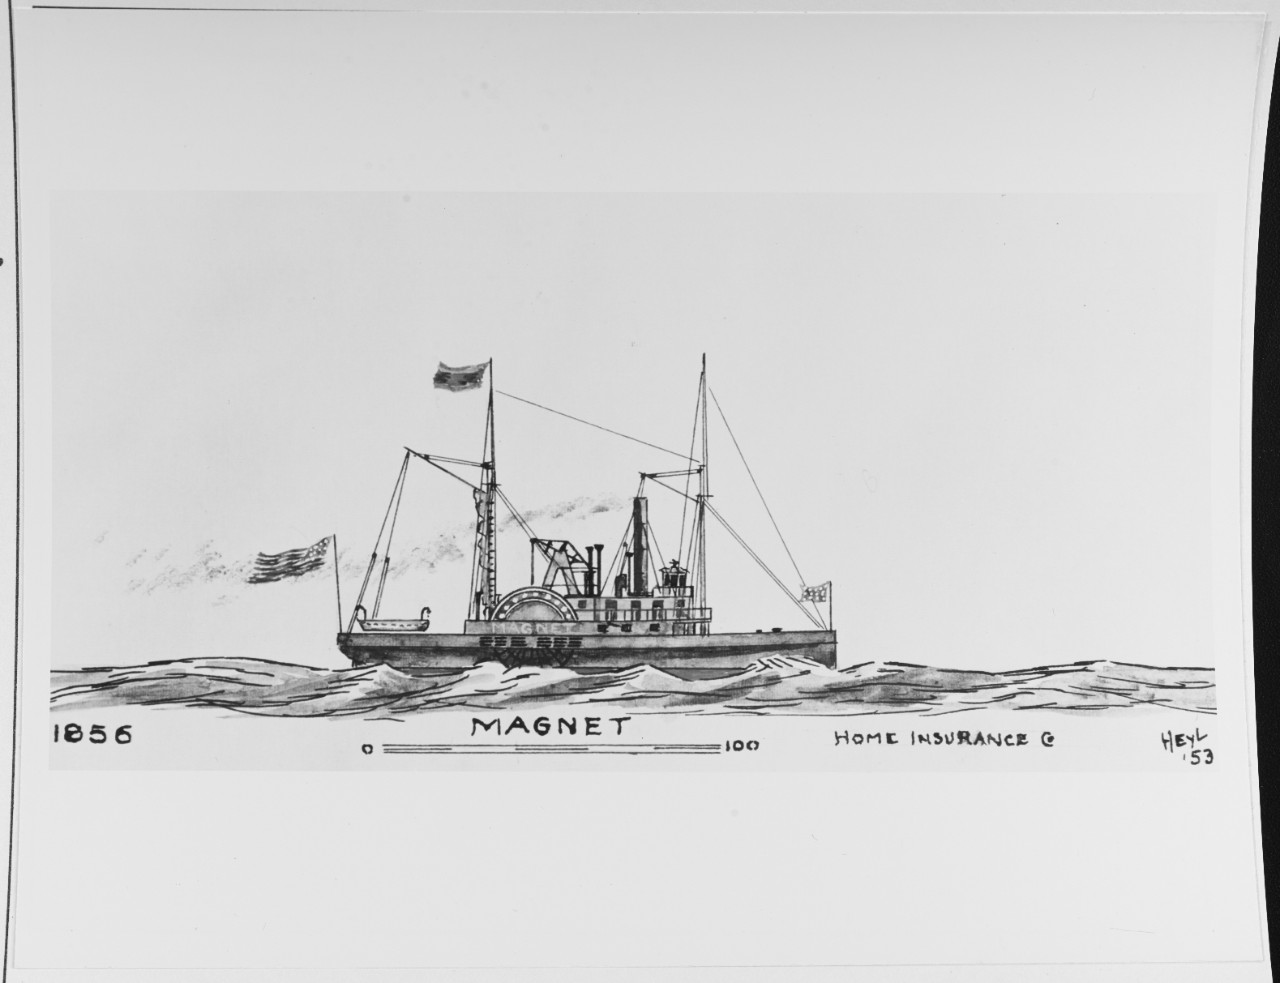 MAGNET (American merchant steamer, 1856-1879)